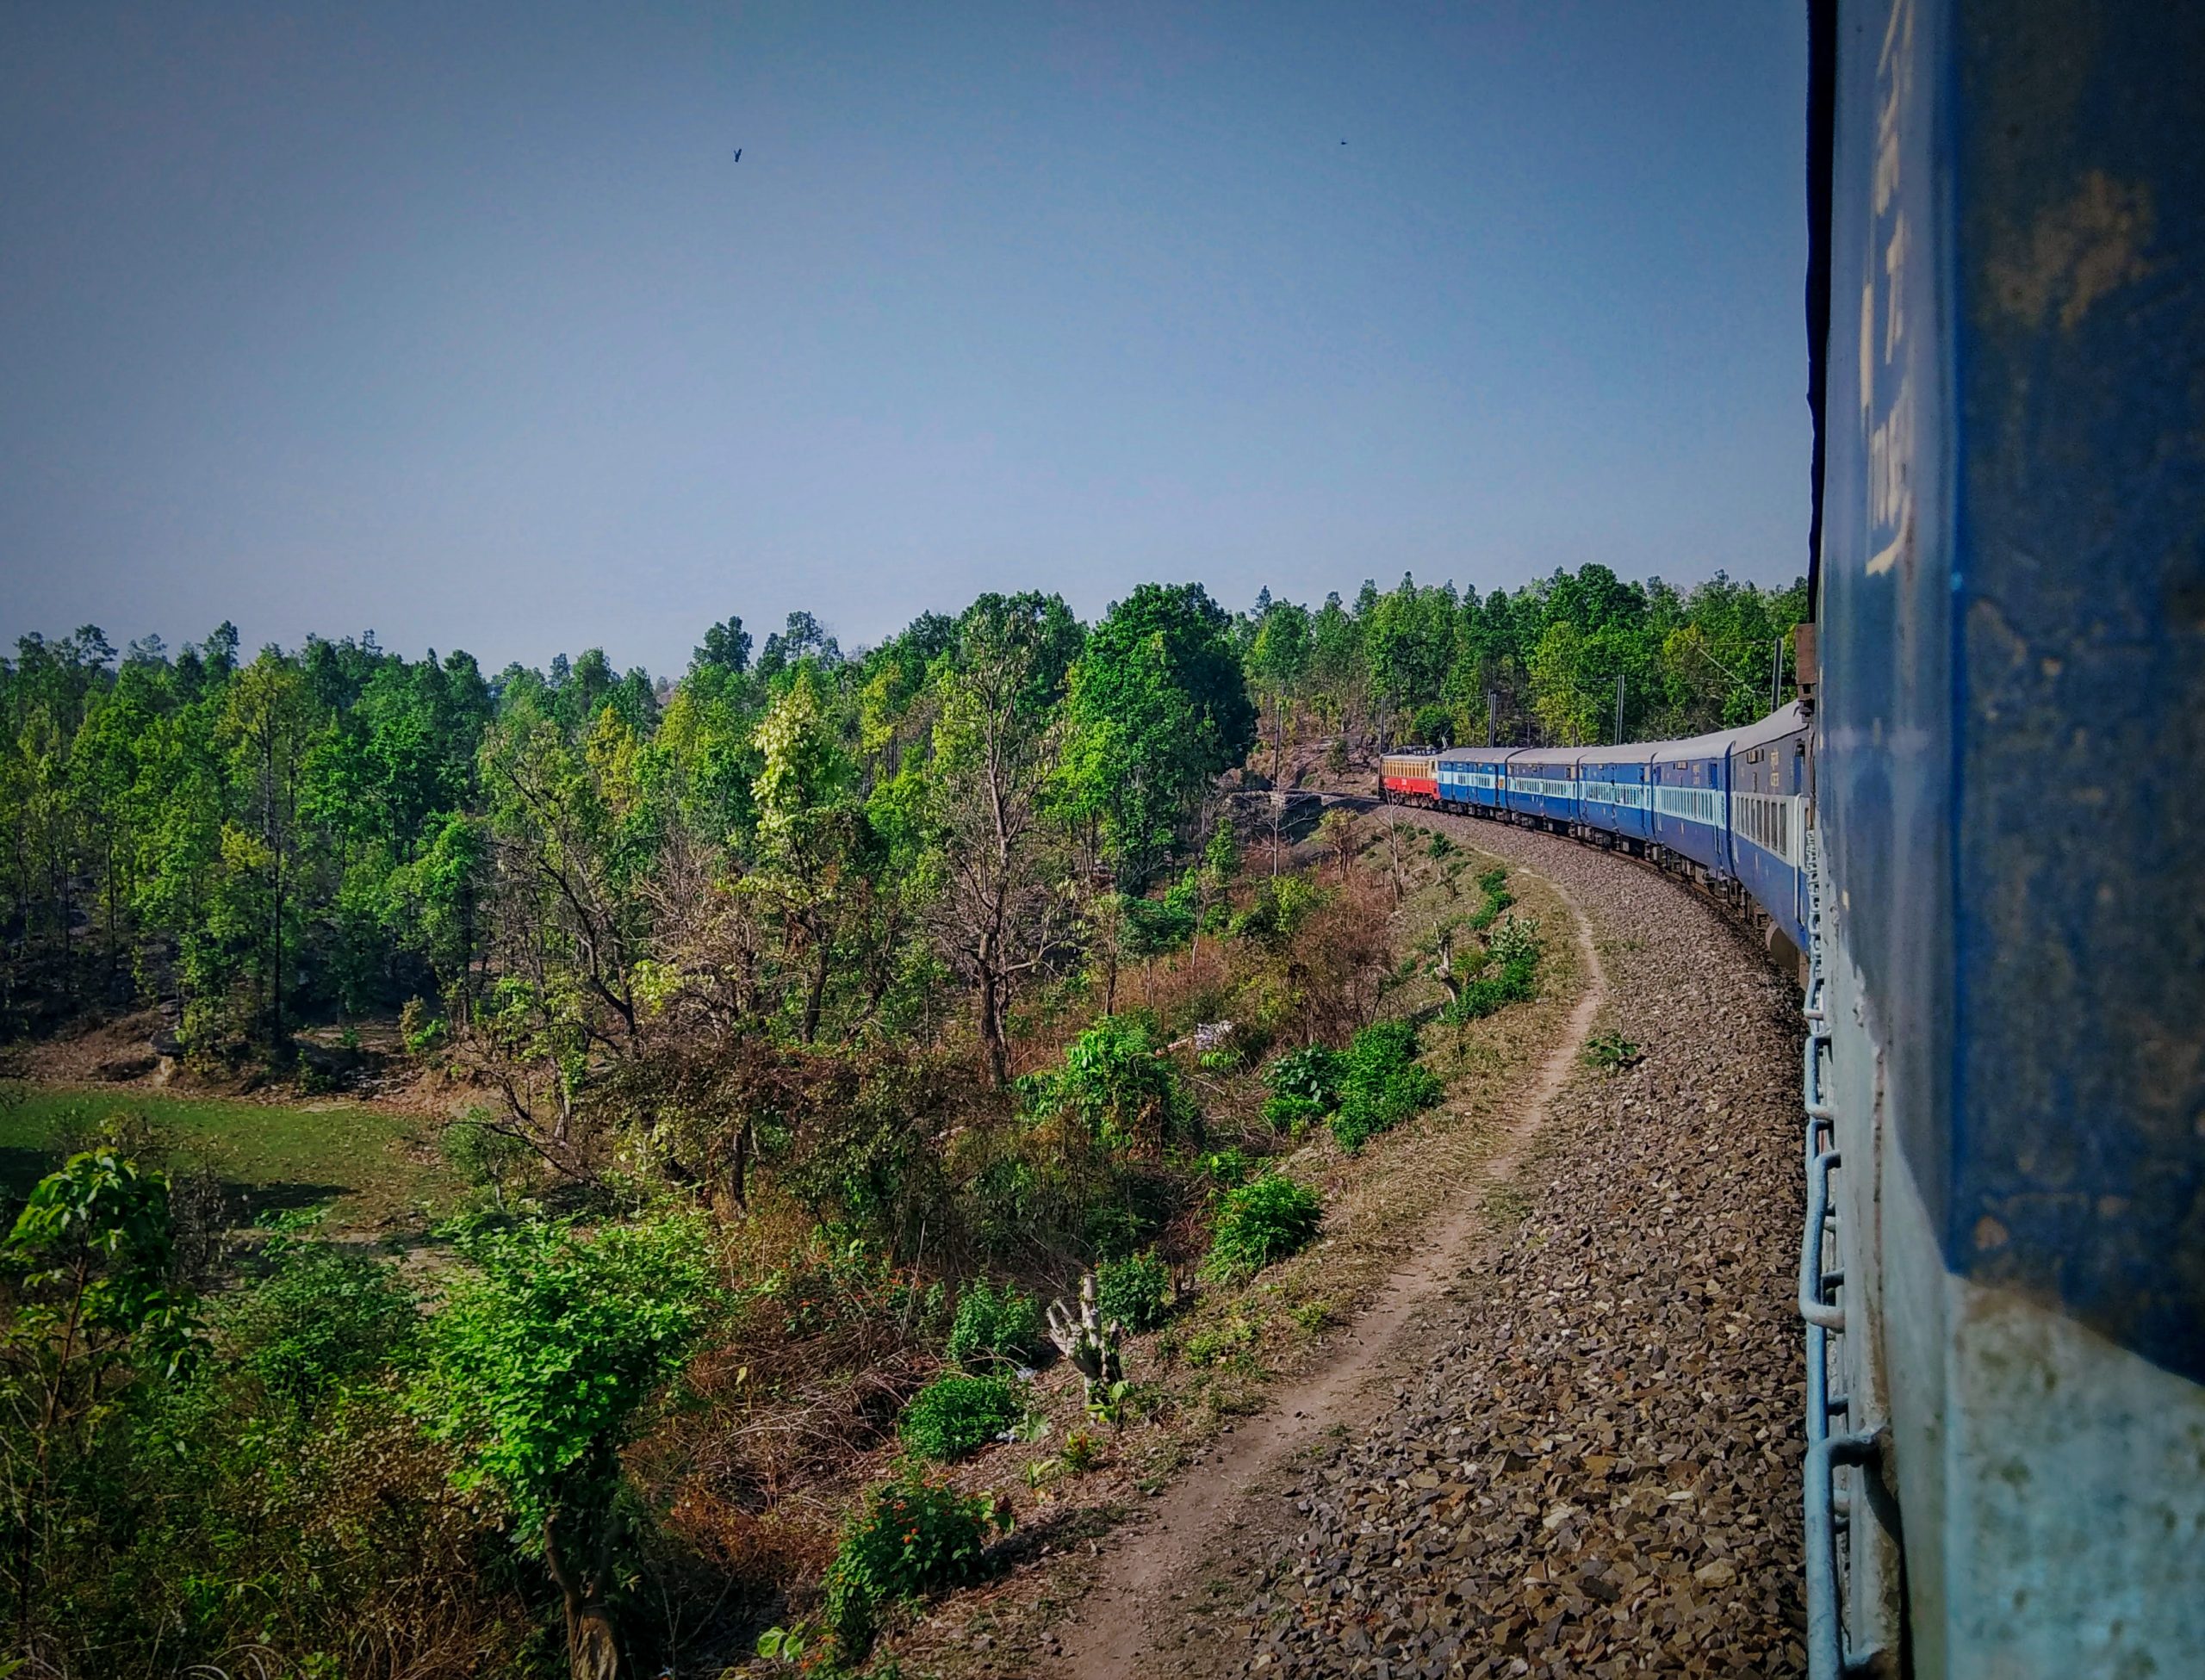 Train Travel